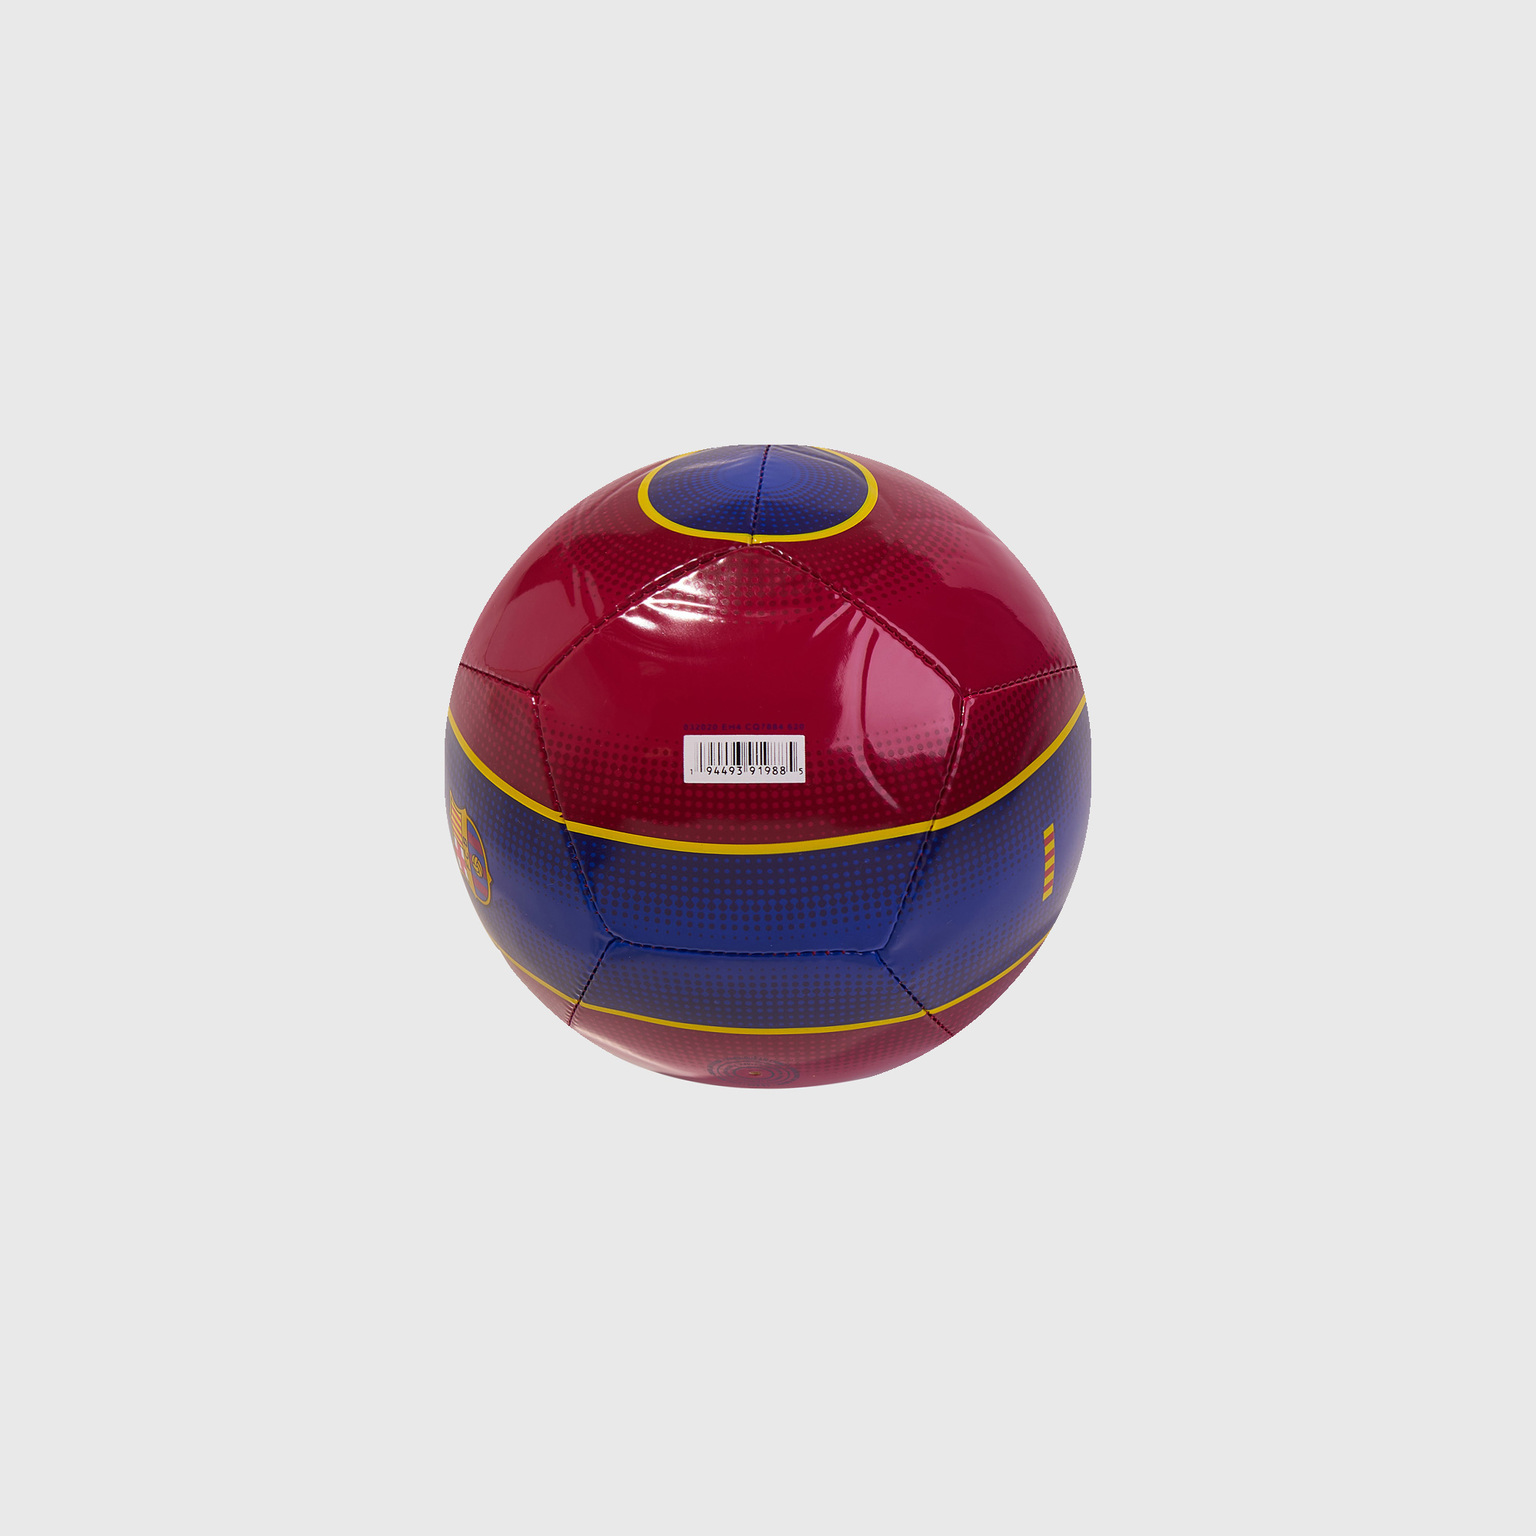 Мяч сувенирный Nike Barcelona CQ7884-620